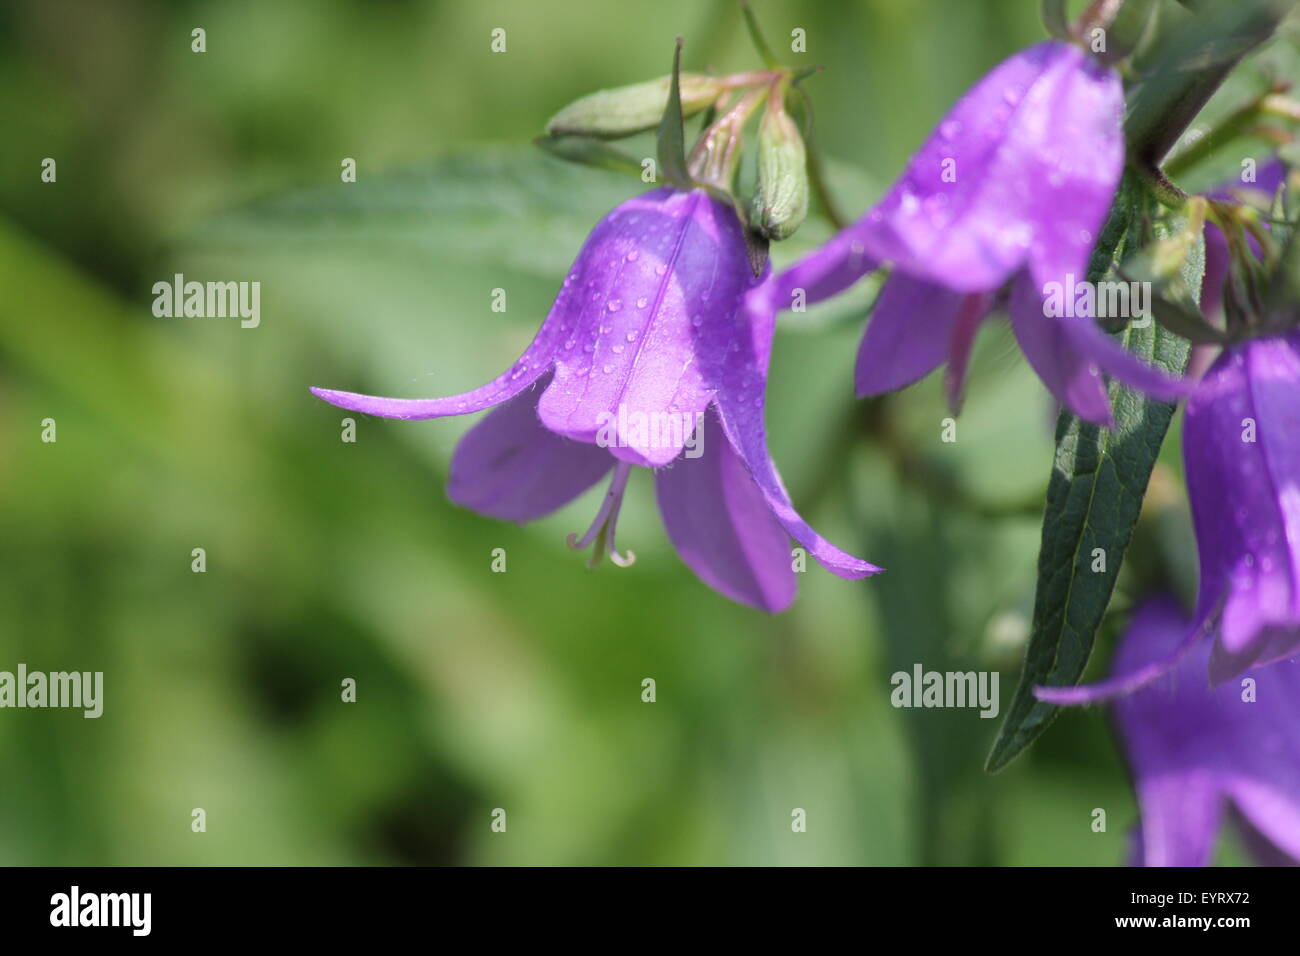 Flor de campana morada fotografías e imágenes de alta resolución - Alamy